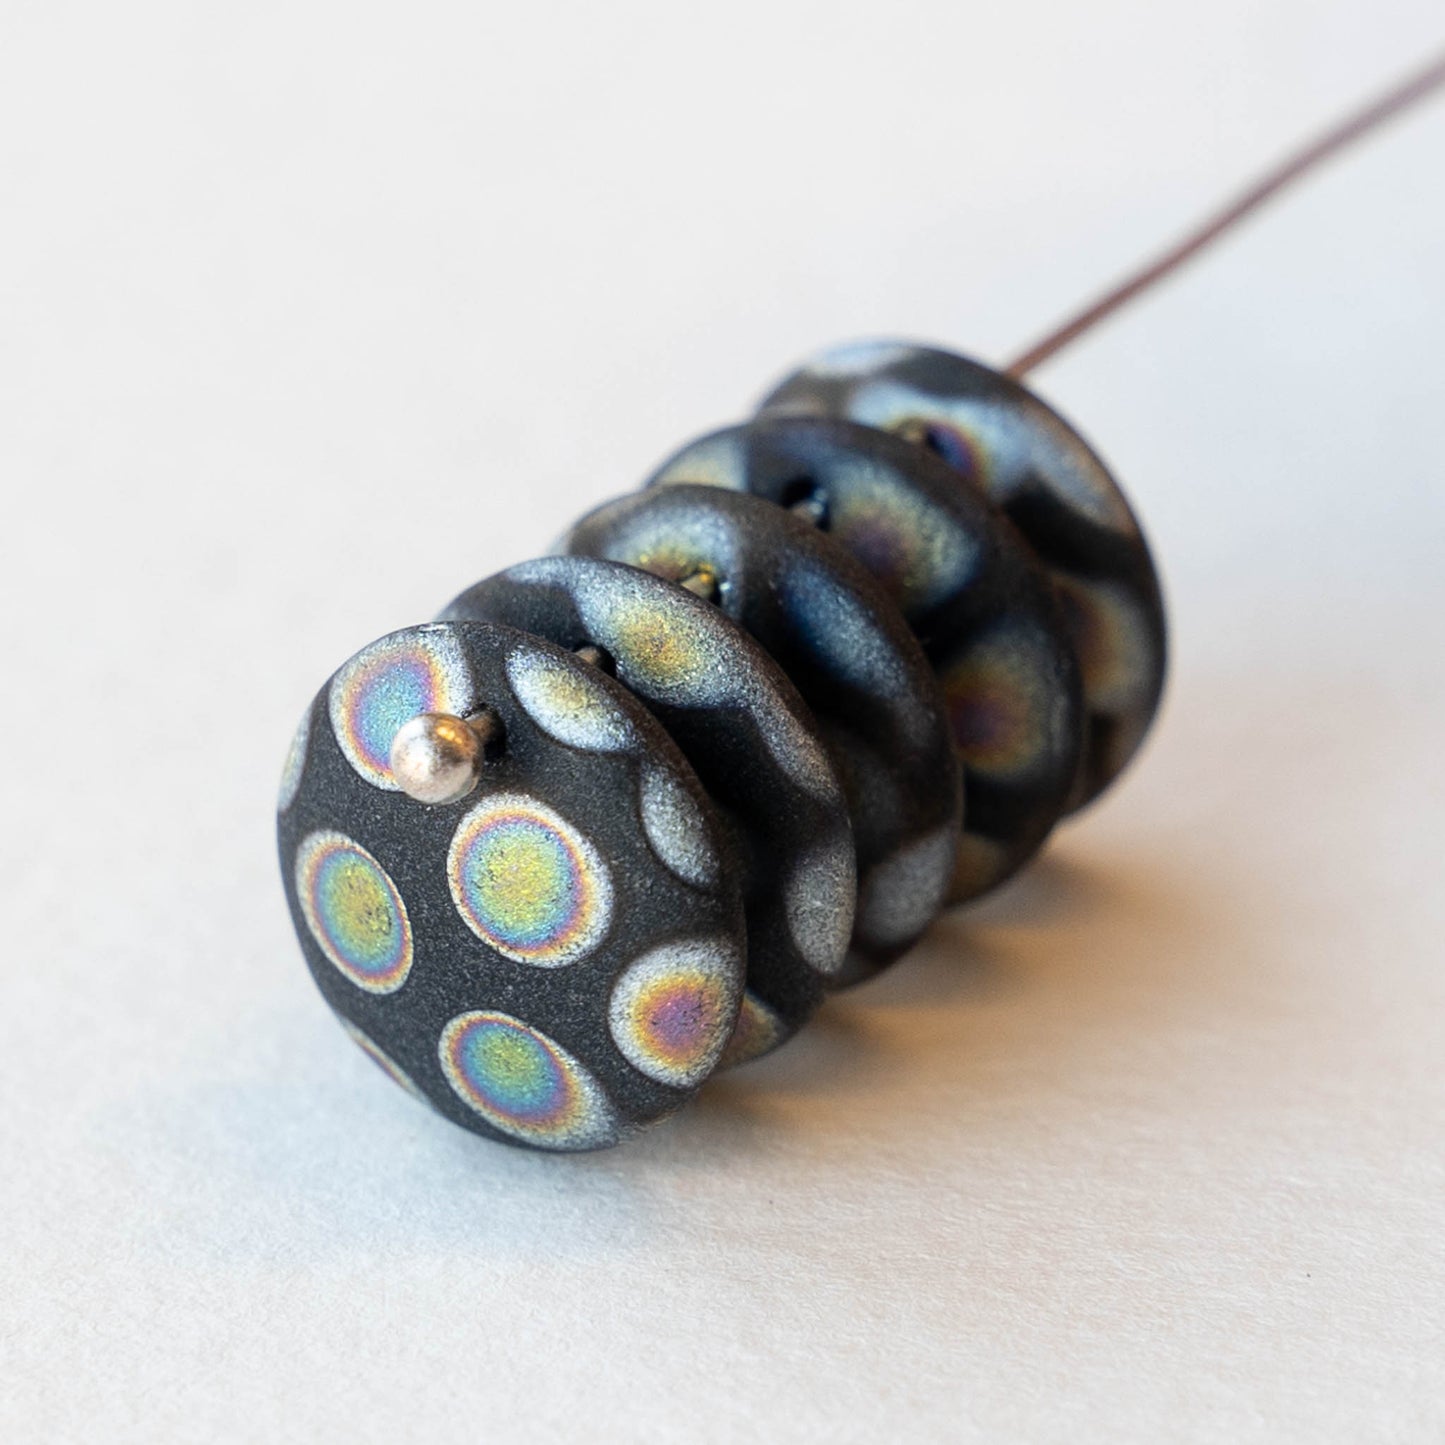 12mm Lentil Drop - Black Matte Peacock - 10 beads